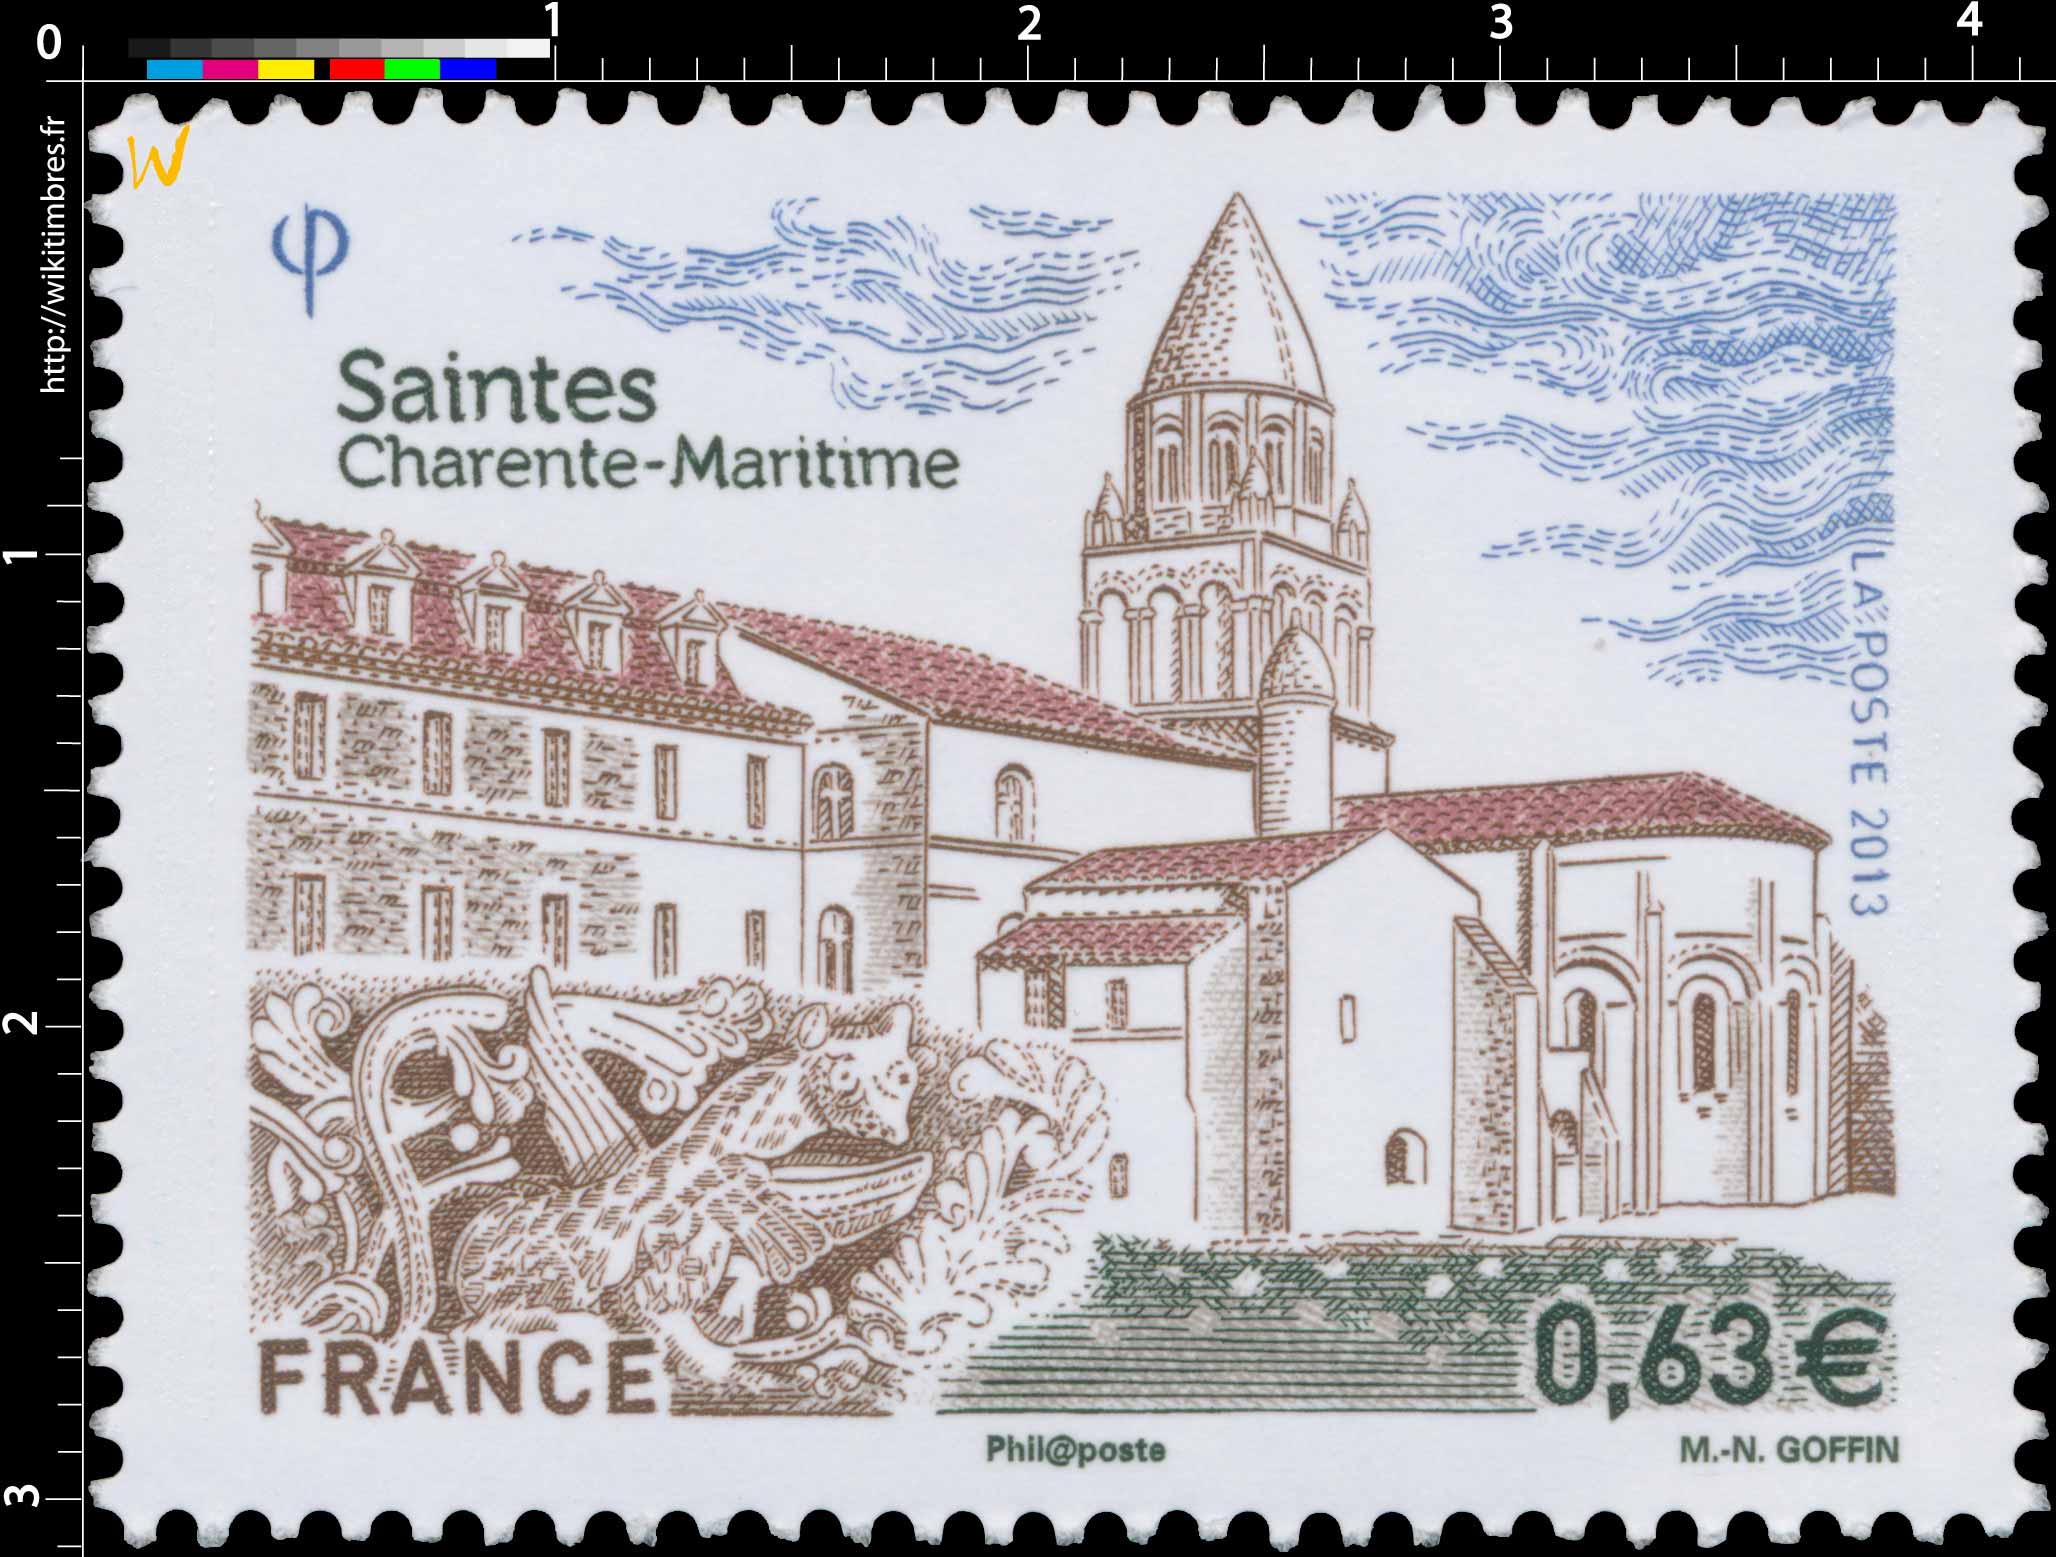 2013 Saintes Charente-Maritime